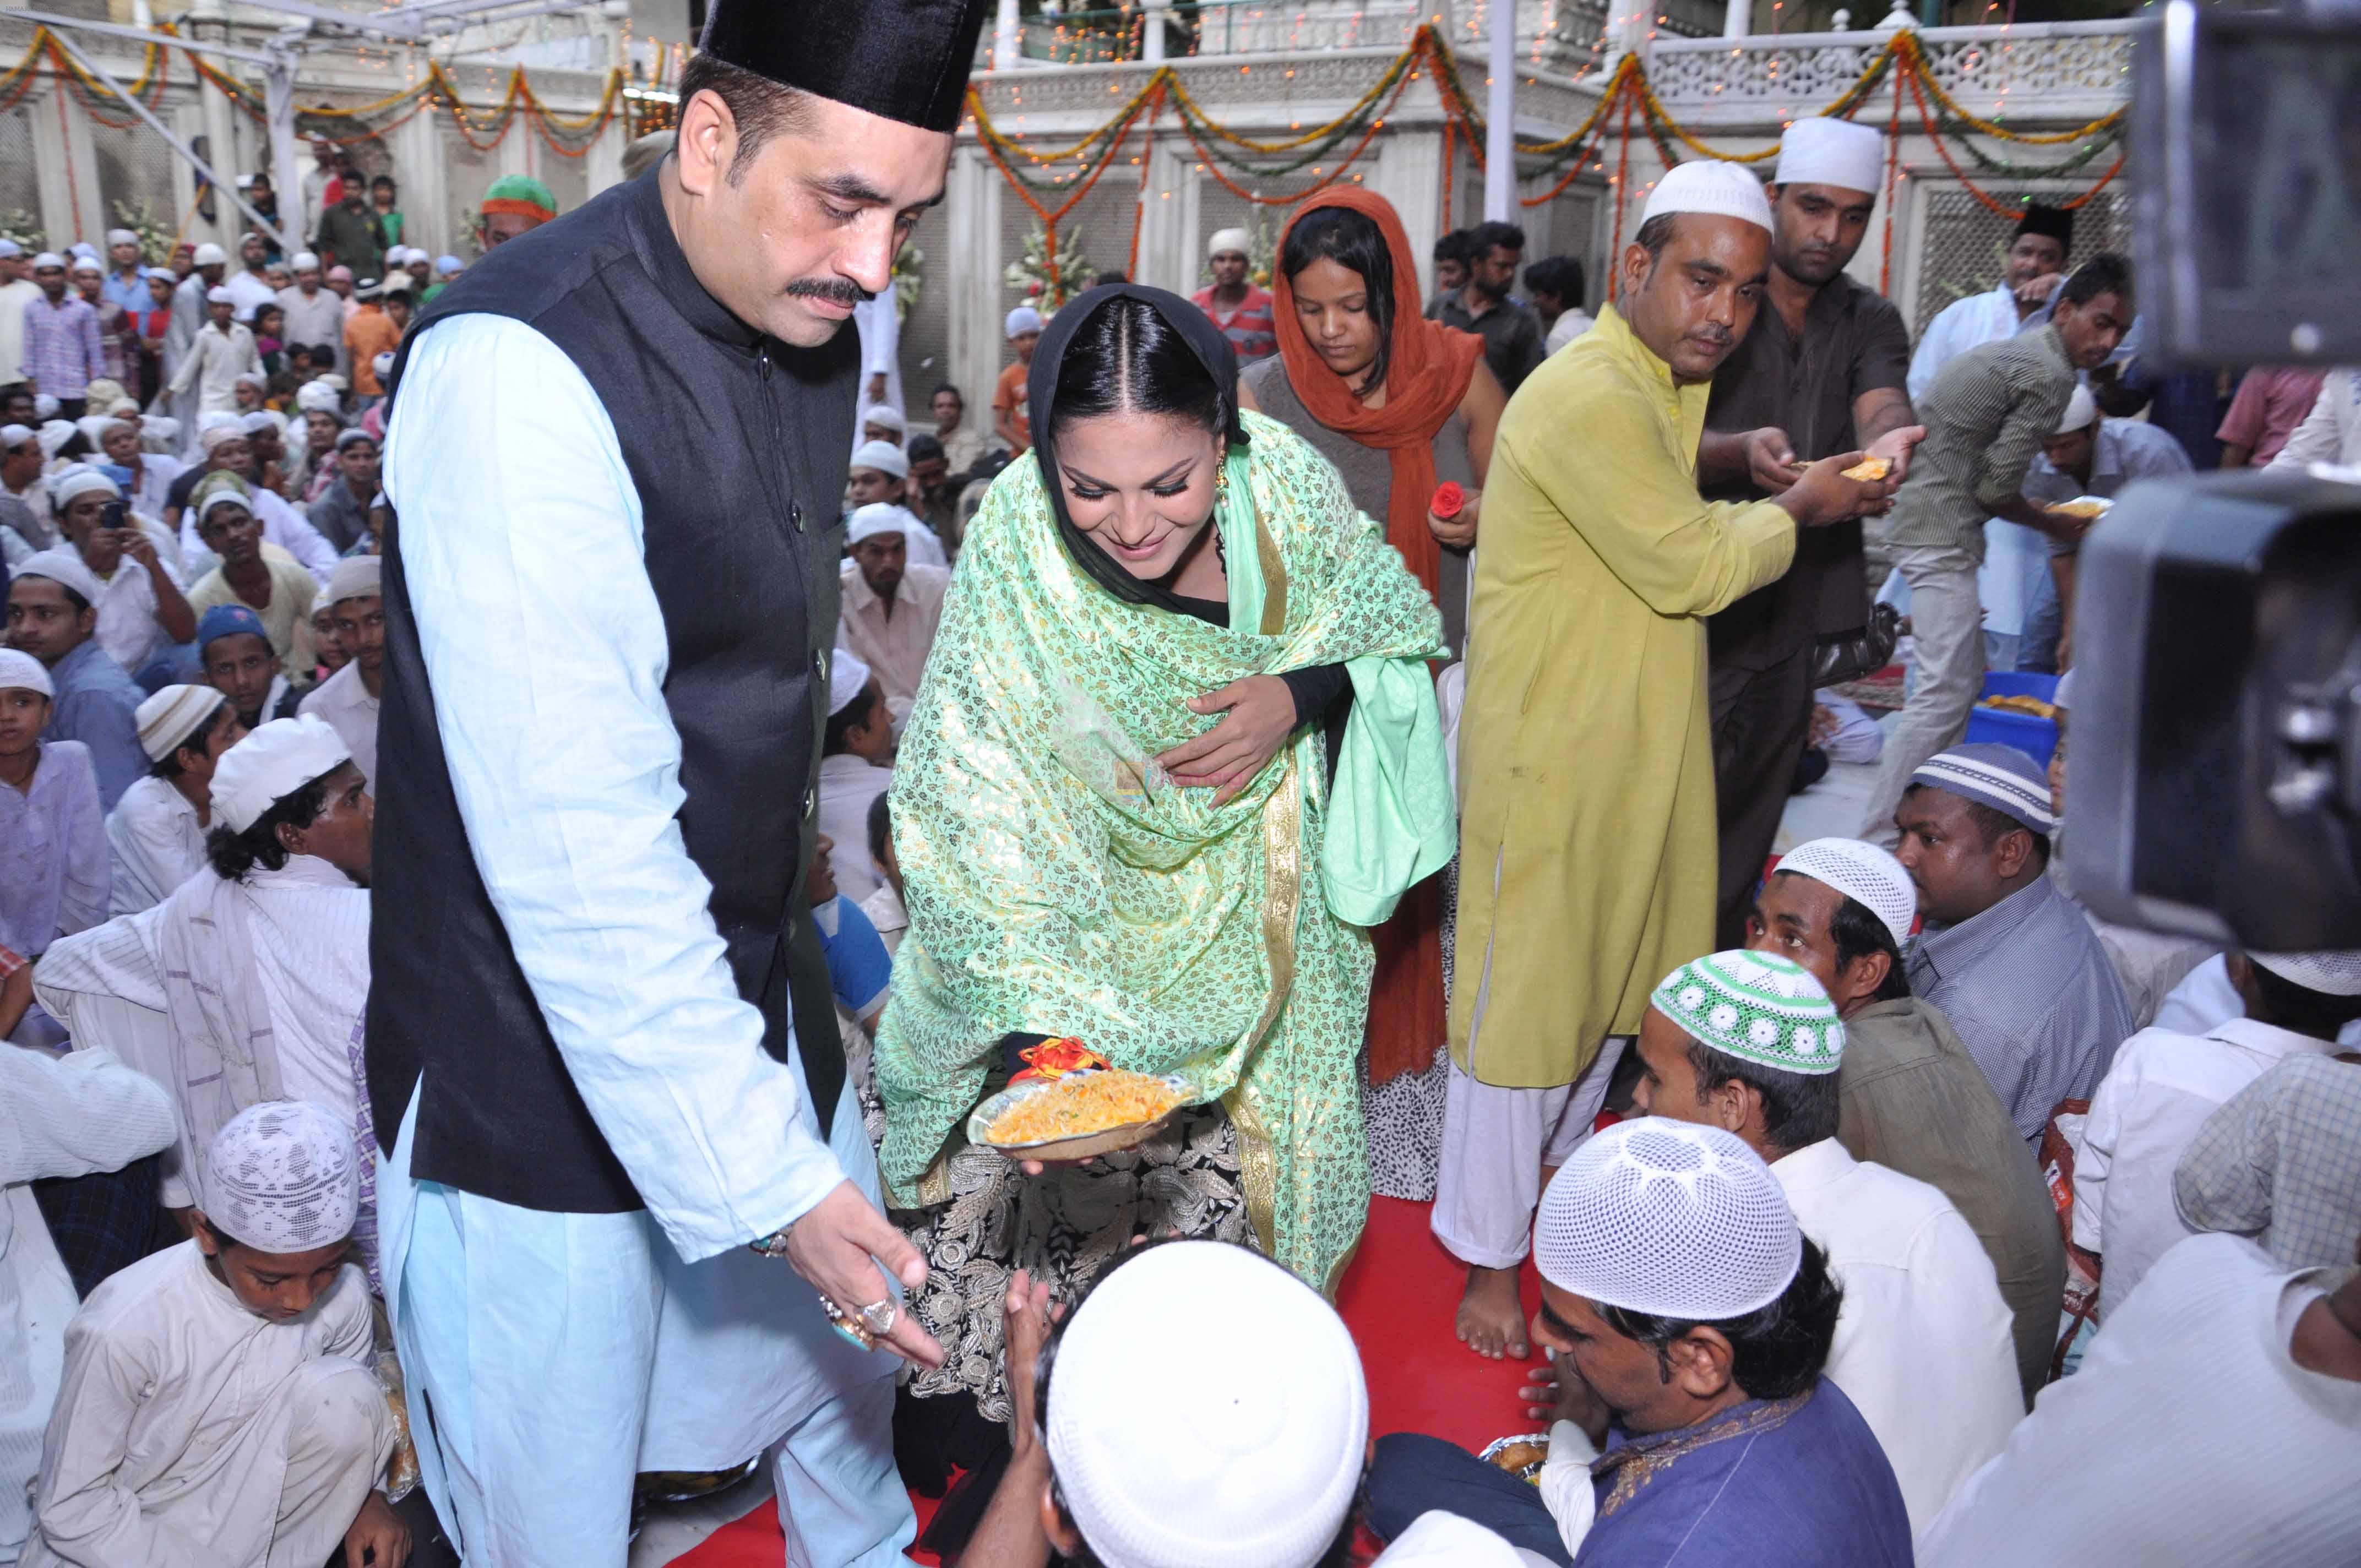 Veena Malik At Hazrat Nizamuddin Dargah In Delhi8